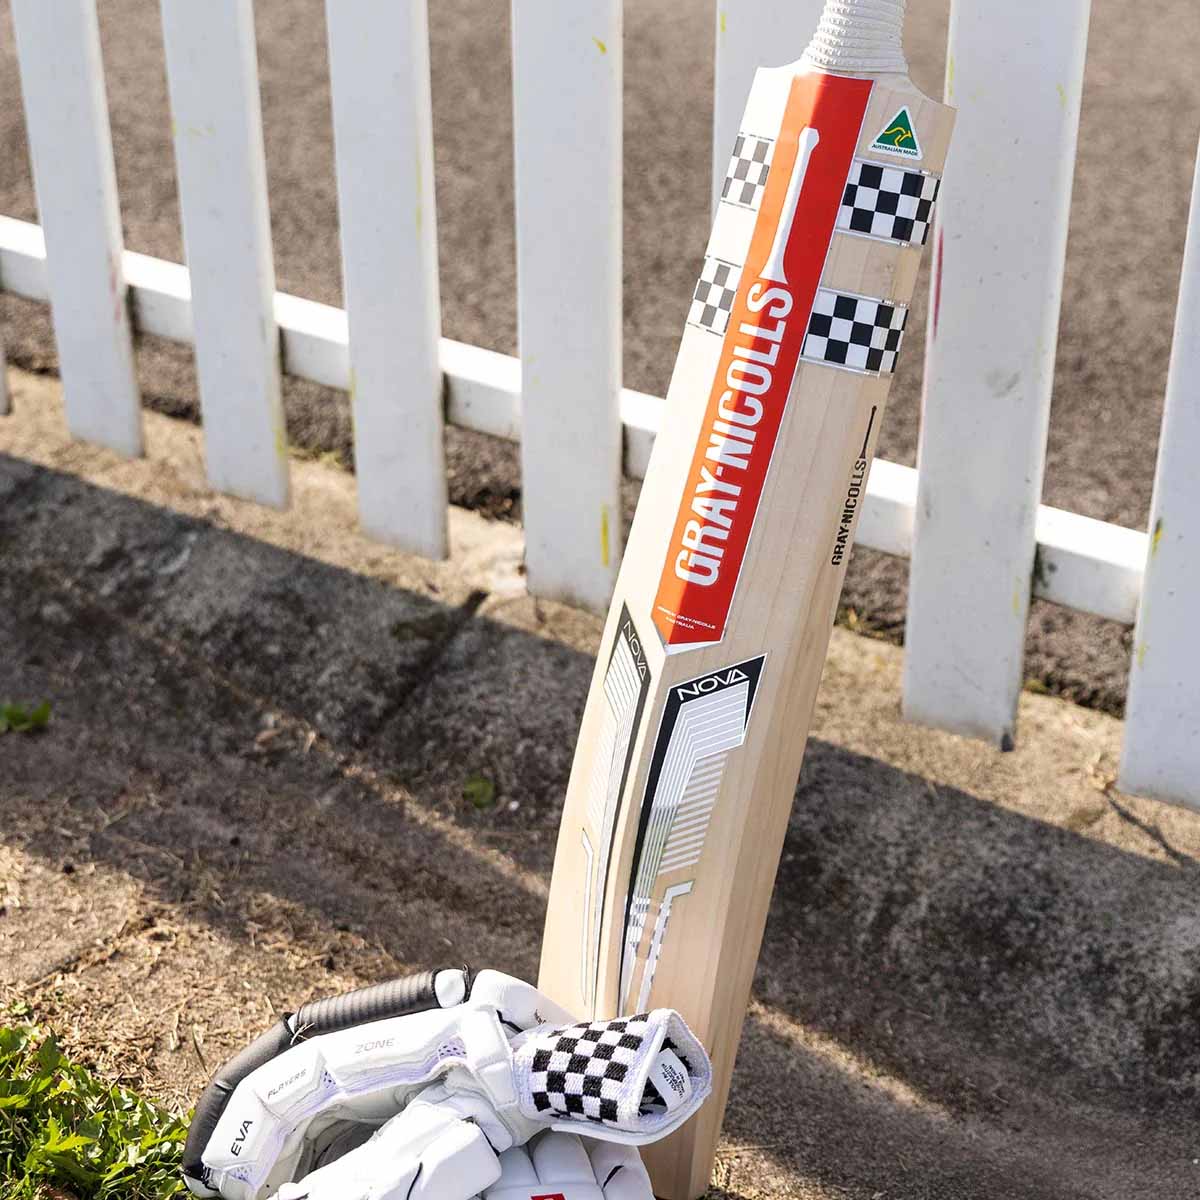 Gray-Nicolls Nova Player Edition Senior Cricket Bat